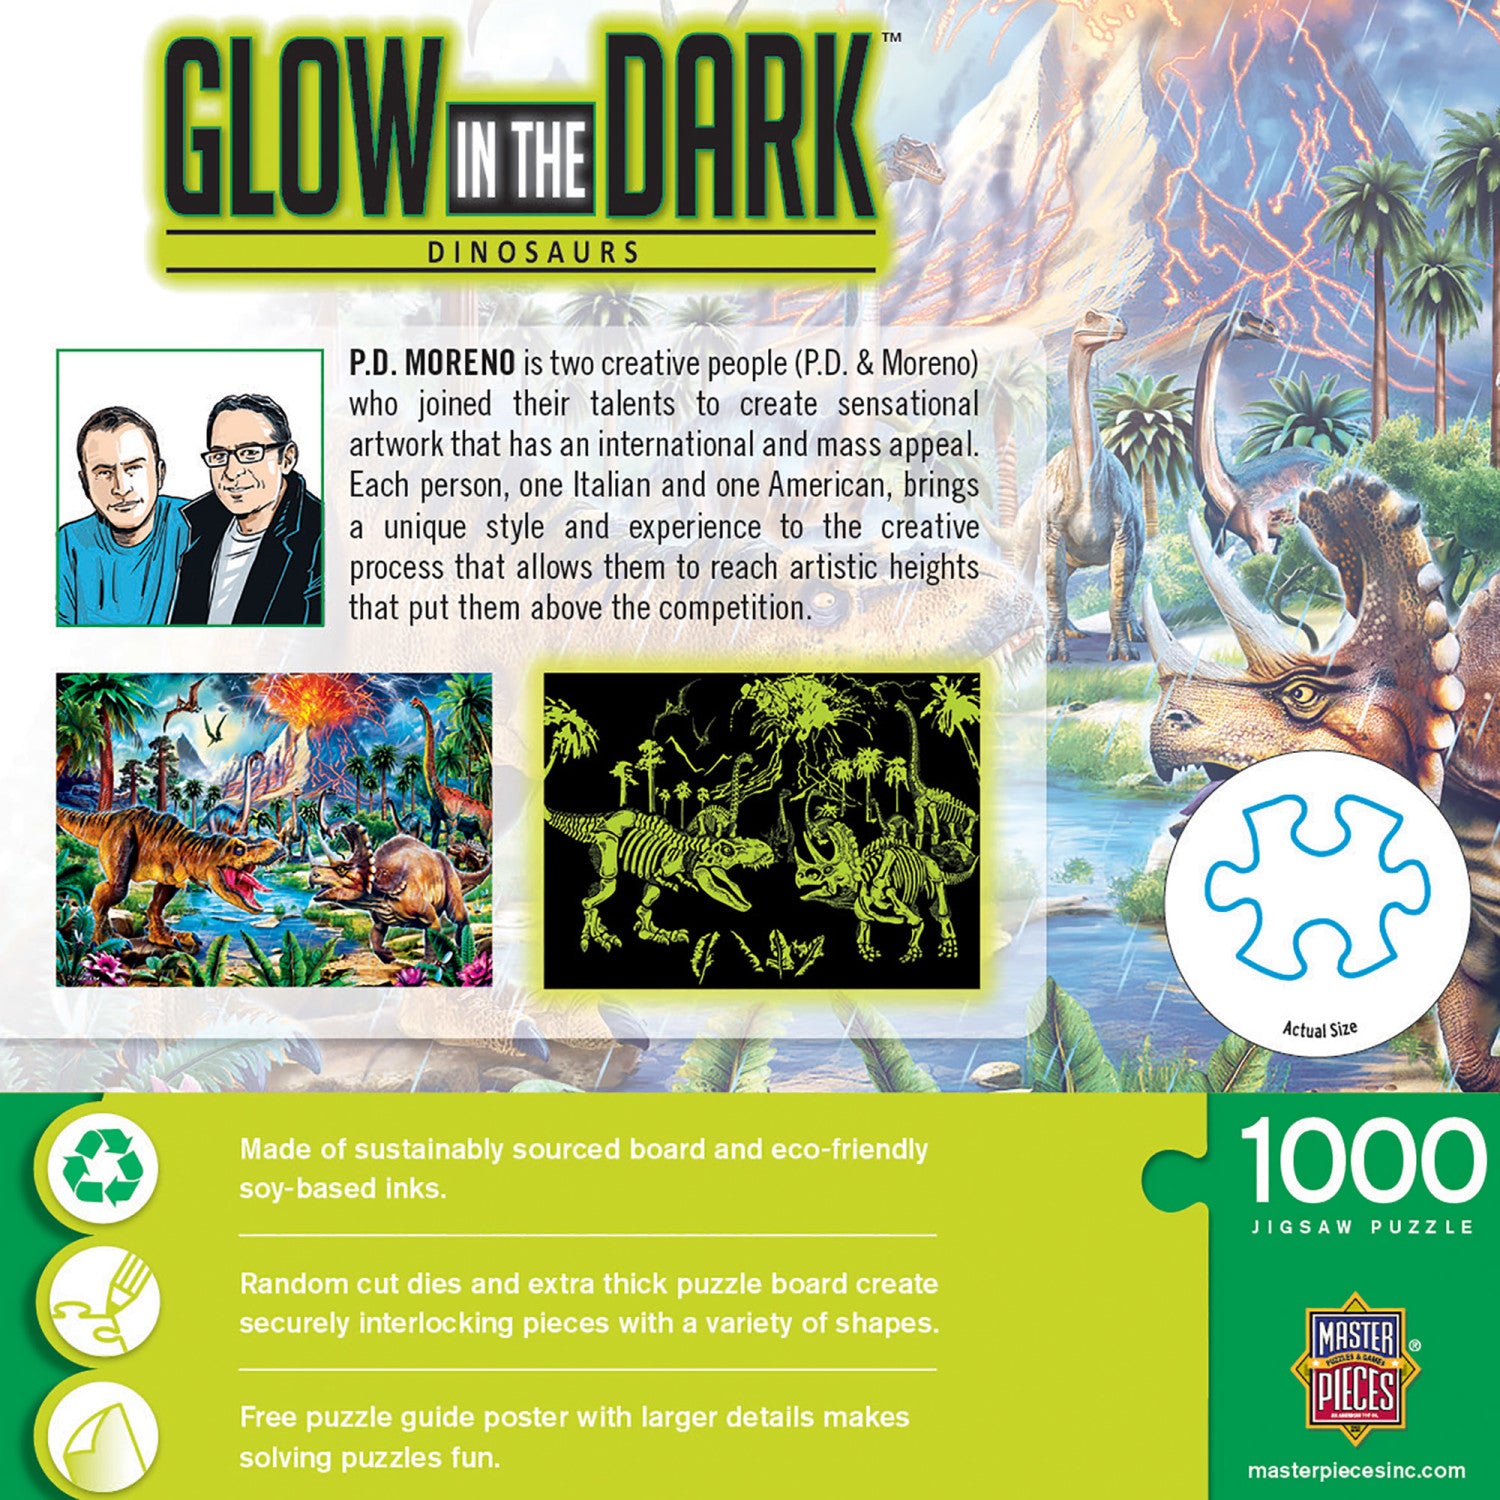 Glow in the Dark - Dinosaurs 1000 Piece Jigsaw Puzzle